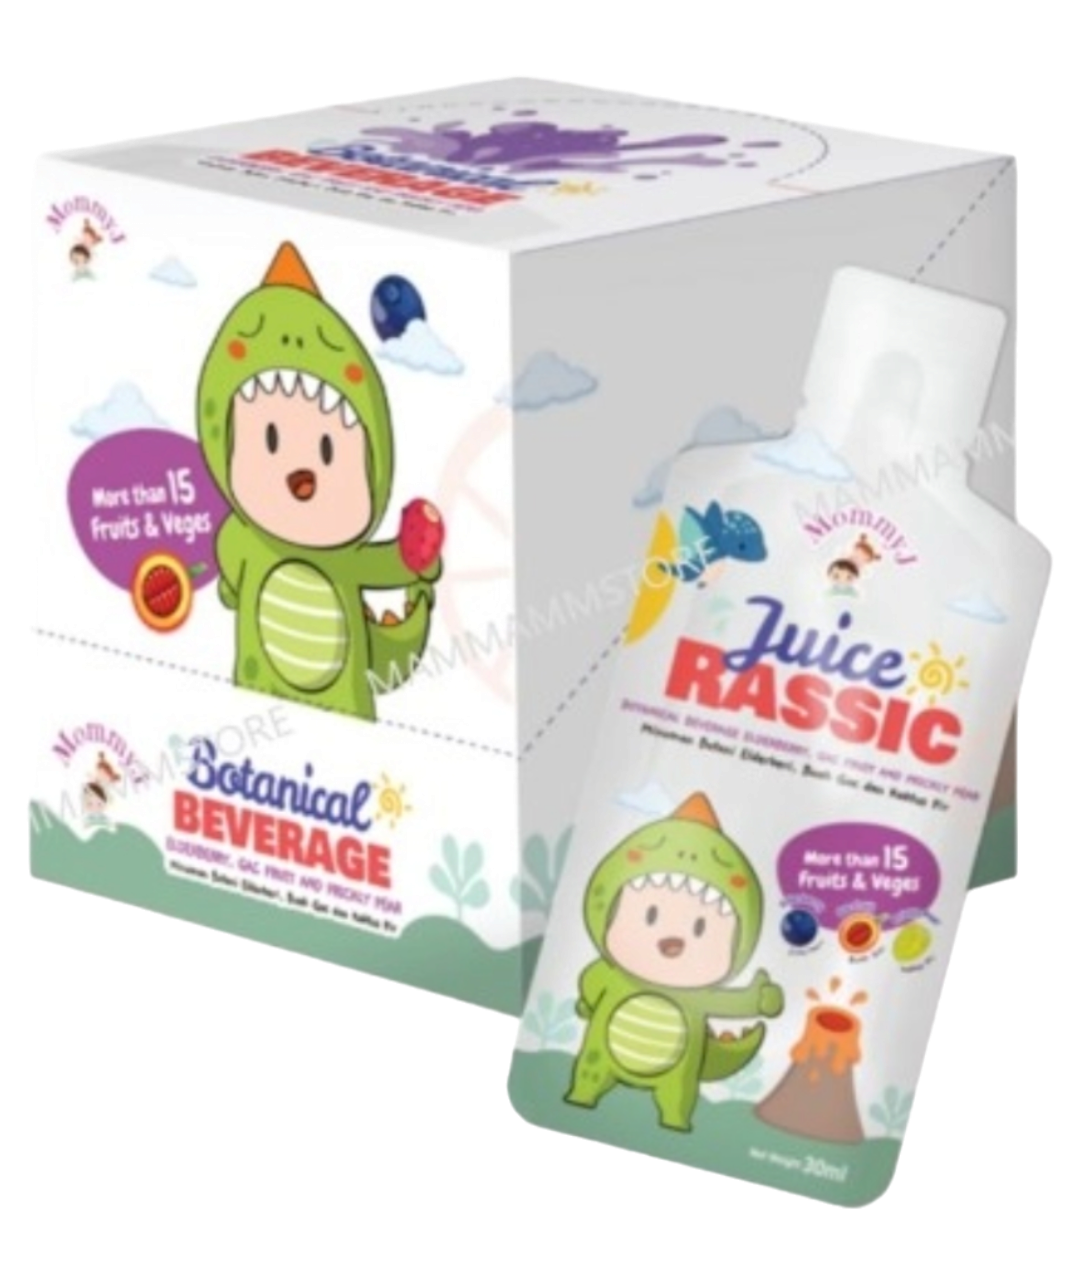 MommyJ Juice Rassic More Than15 Fruit & Veges 30ml